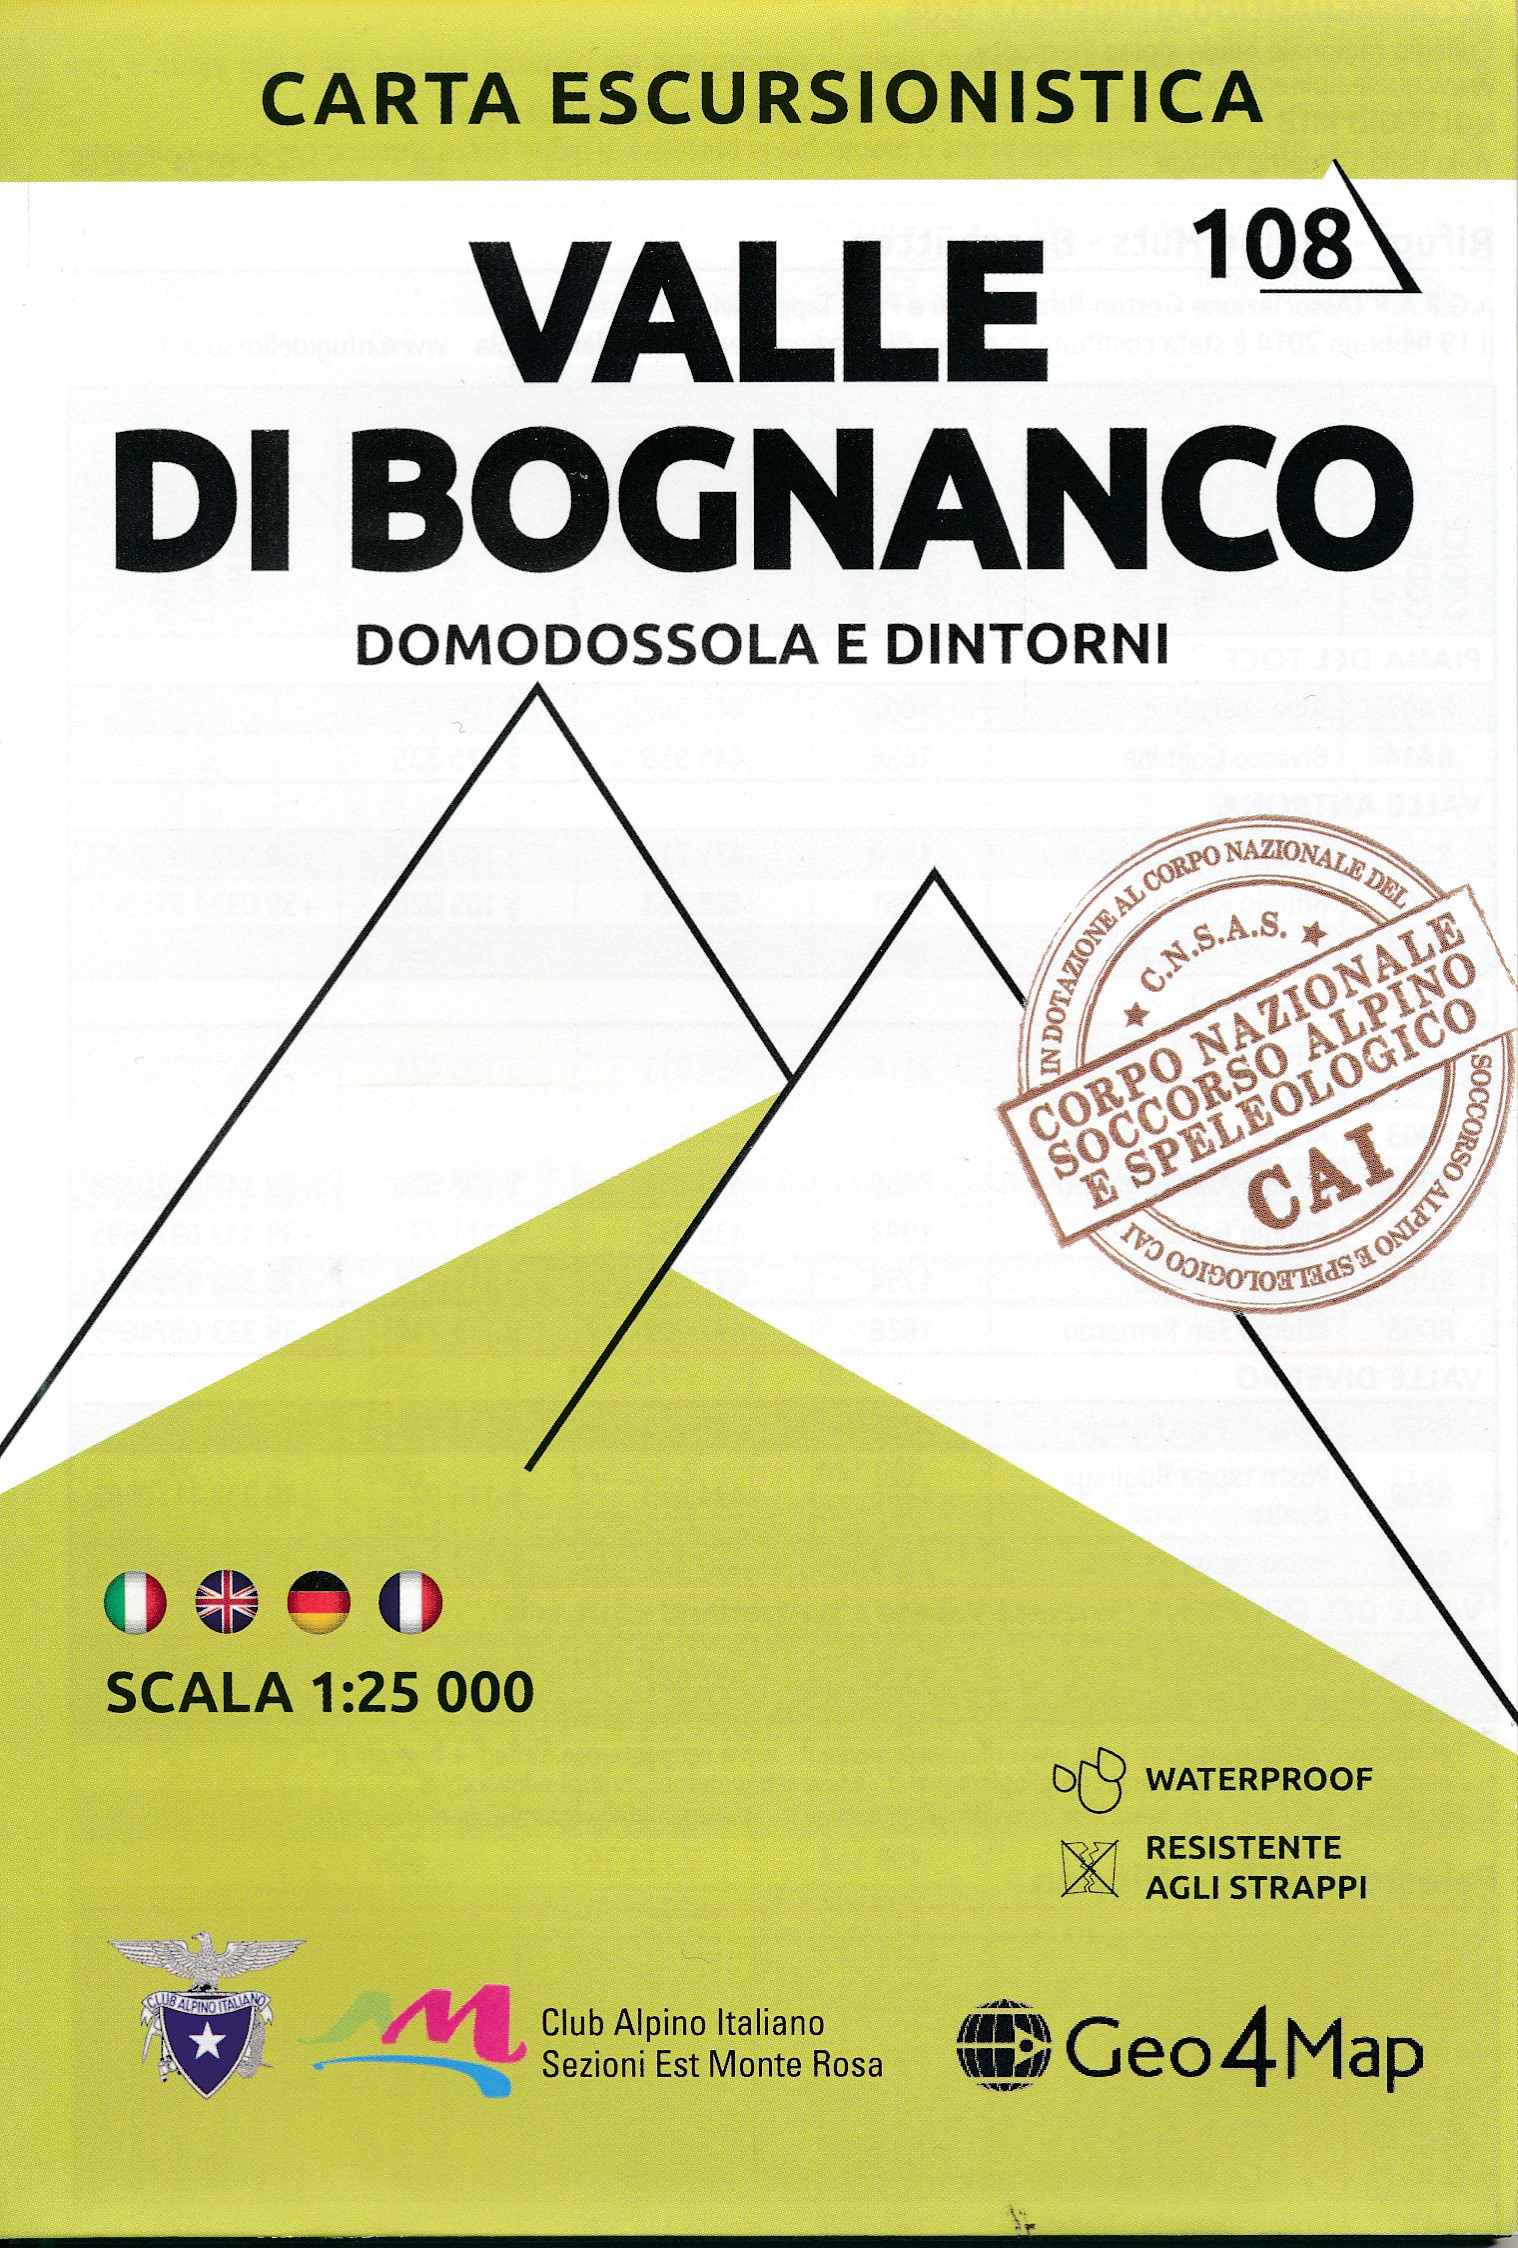 Online bestellen: Wandelkaart 108 Valle di Bognanco - Domodossola e dintorni | Geo4Map